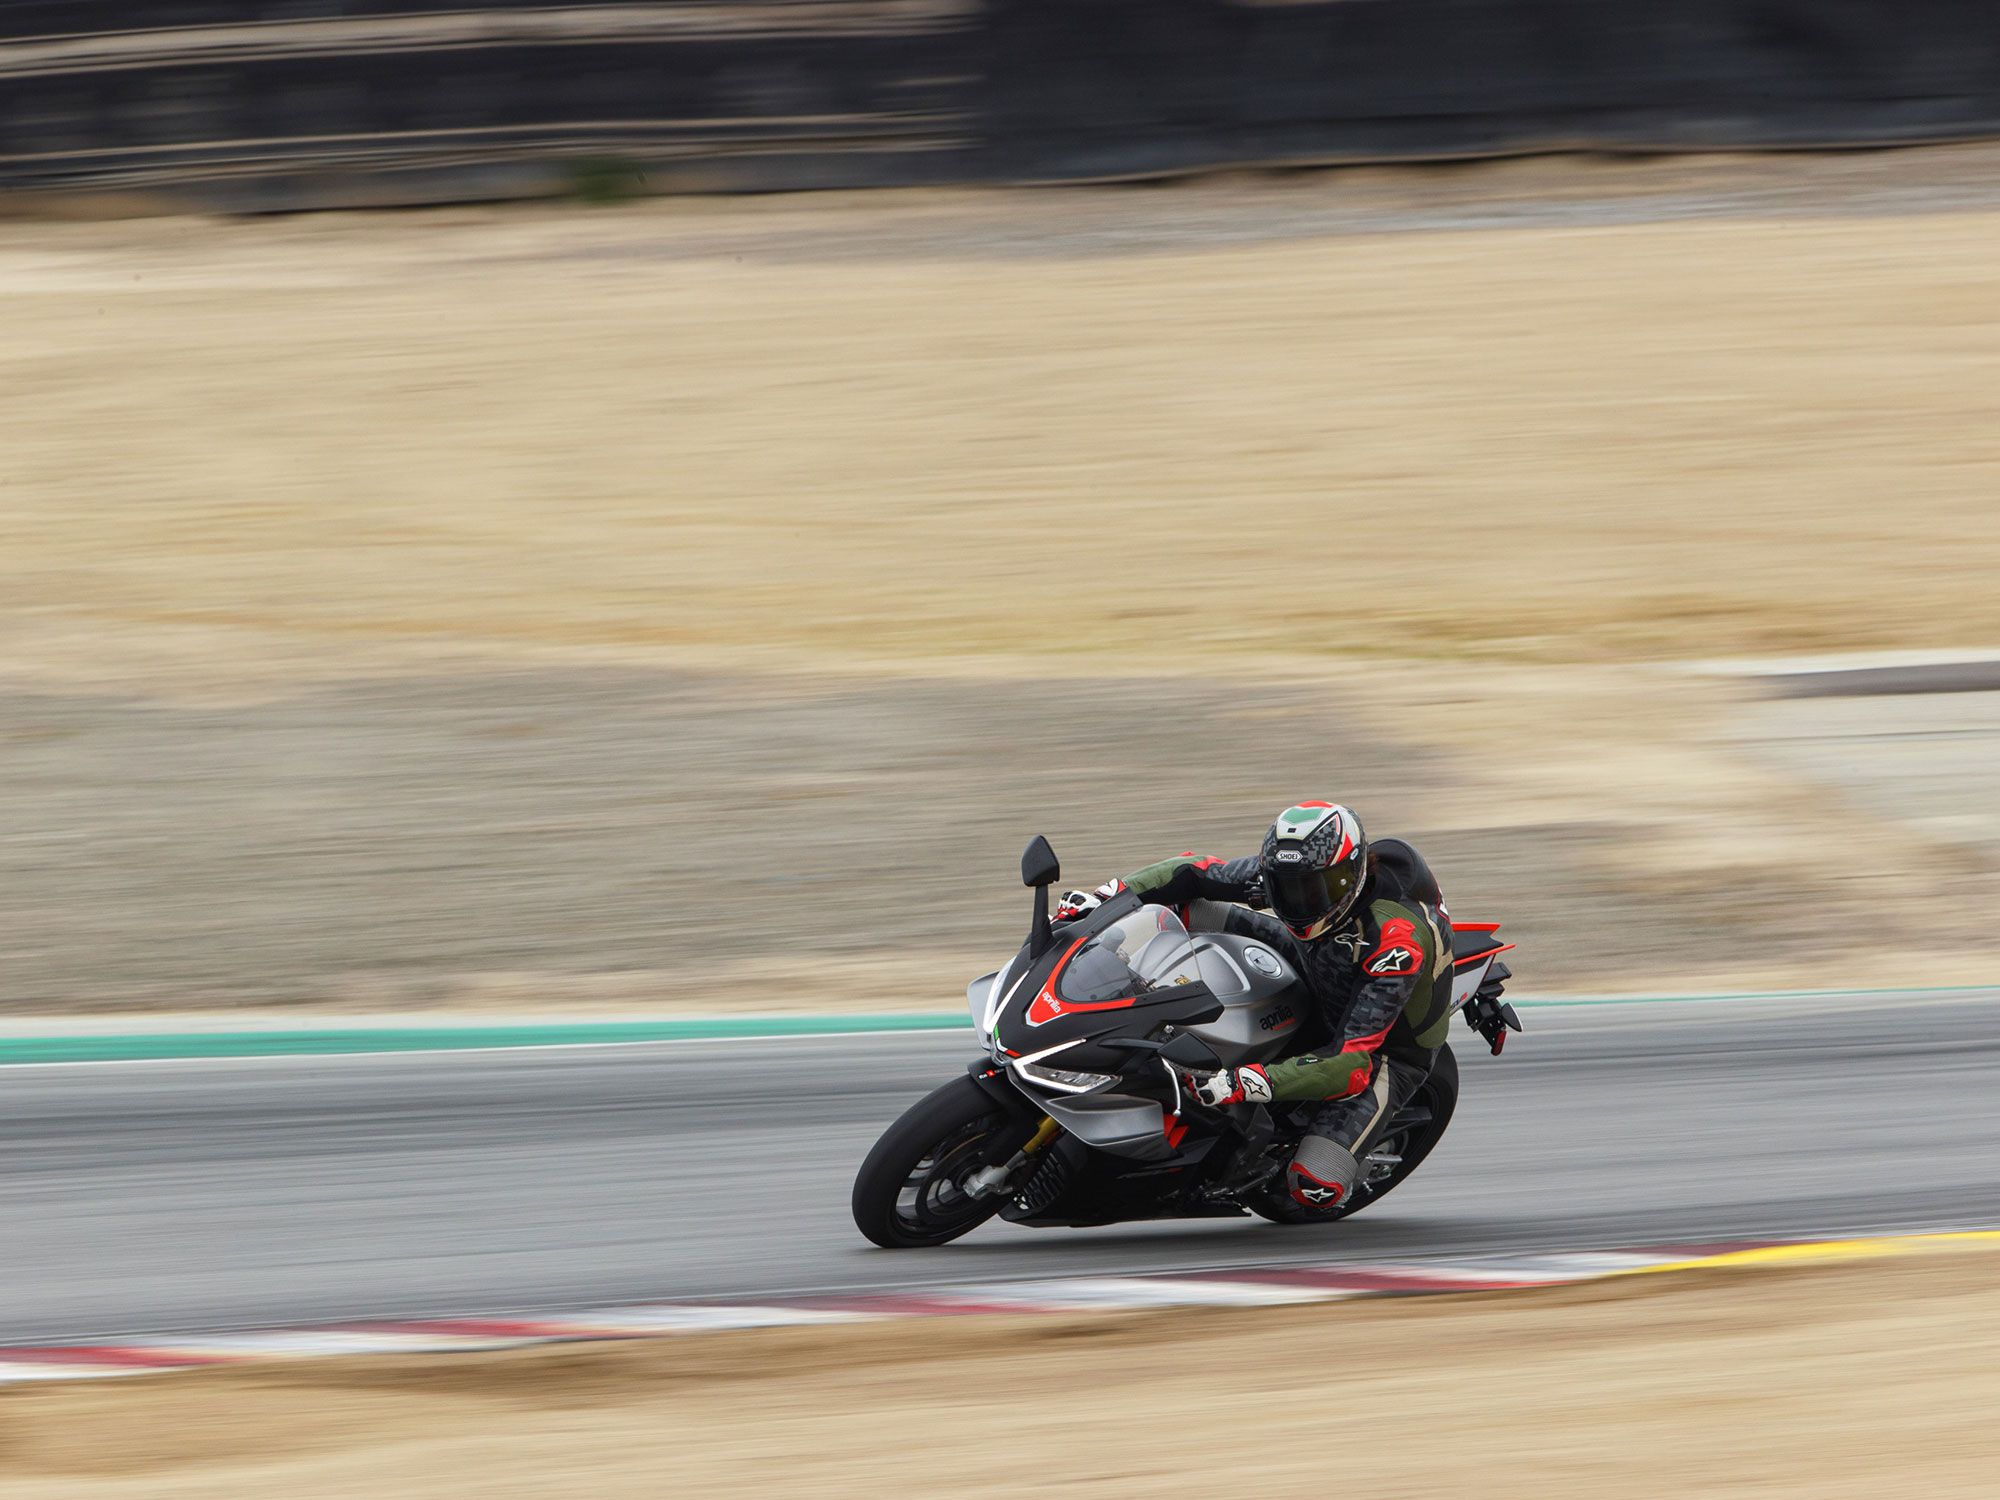 We ride Aprilia’s updated-for-2021 RSV4 superbike at Weathertech Raceway Laguna Seca.